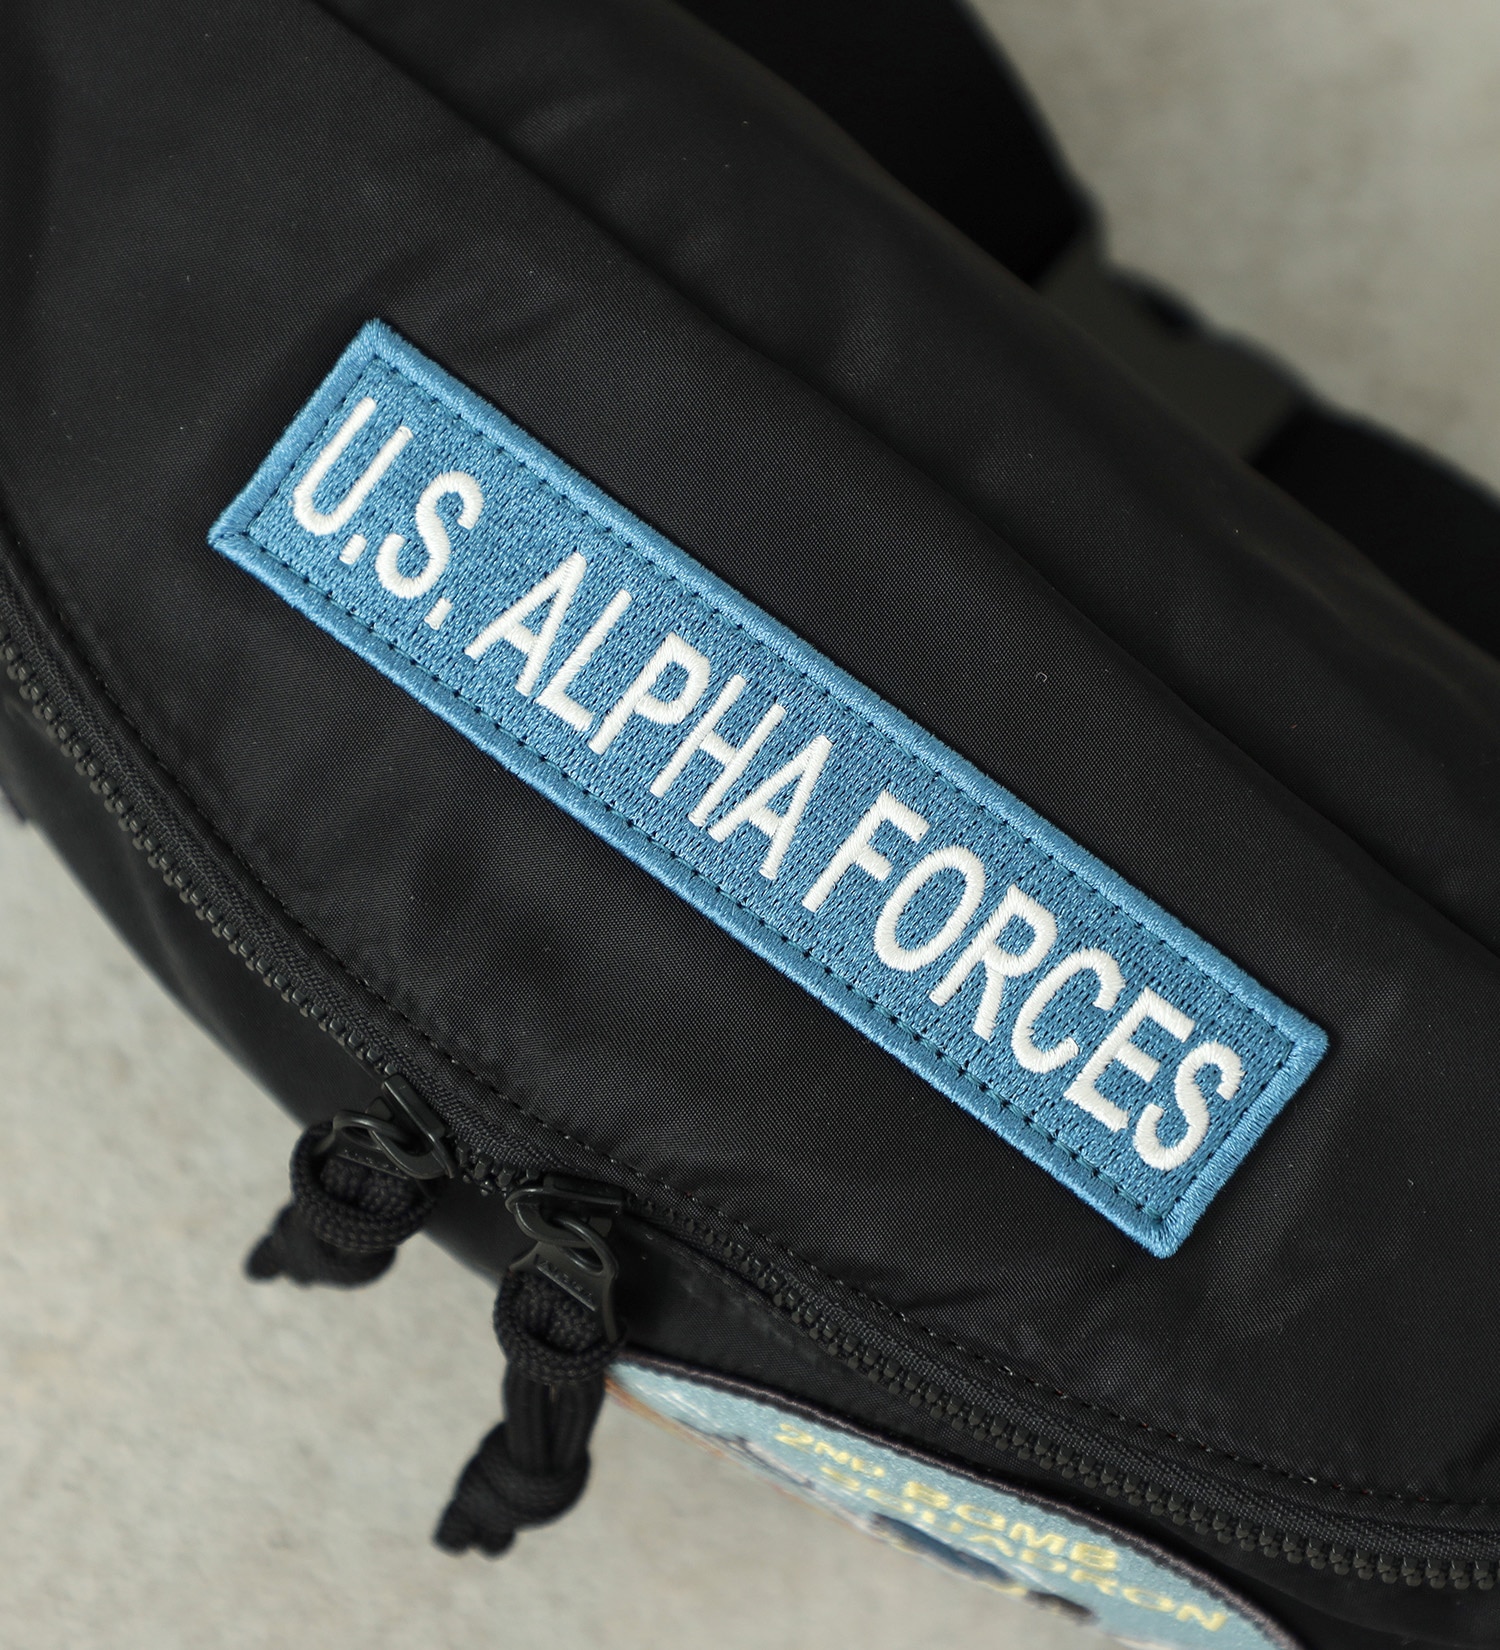 ALPHA(アルファ)のパッチド ウエストバッグ コーデュラ|バッグ/ボディバッグ/ウェストポーチ/メンズ|ブラック